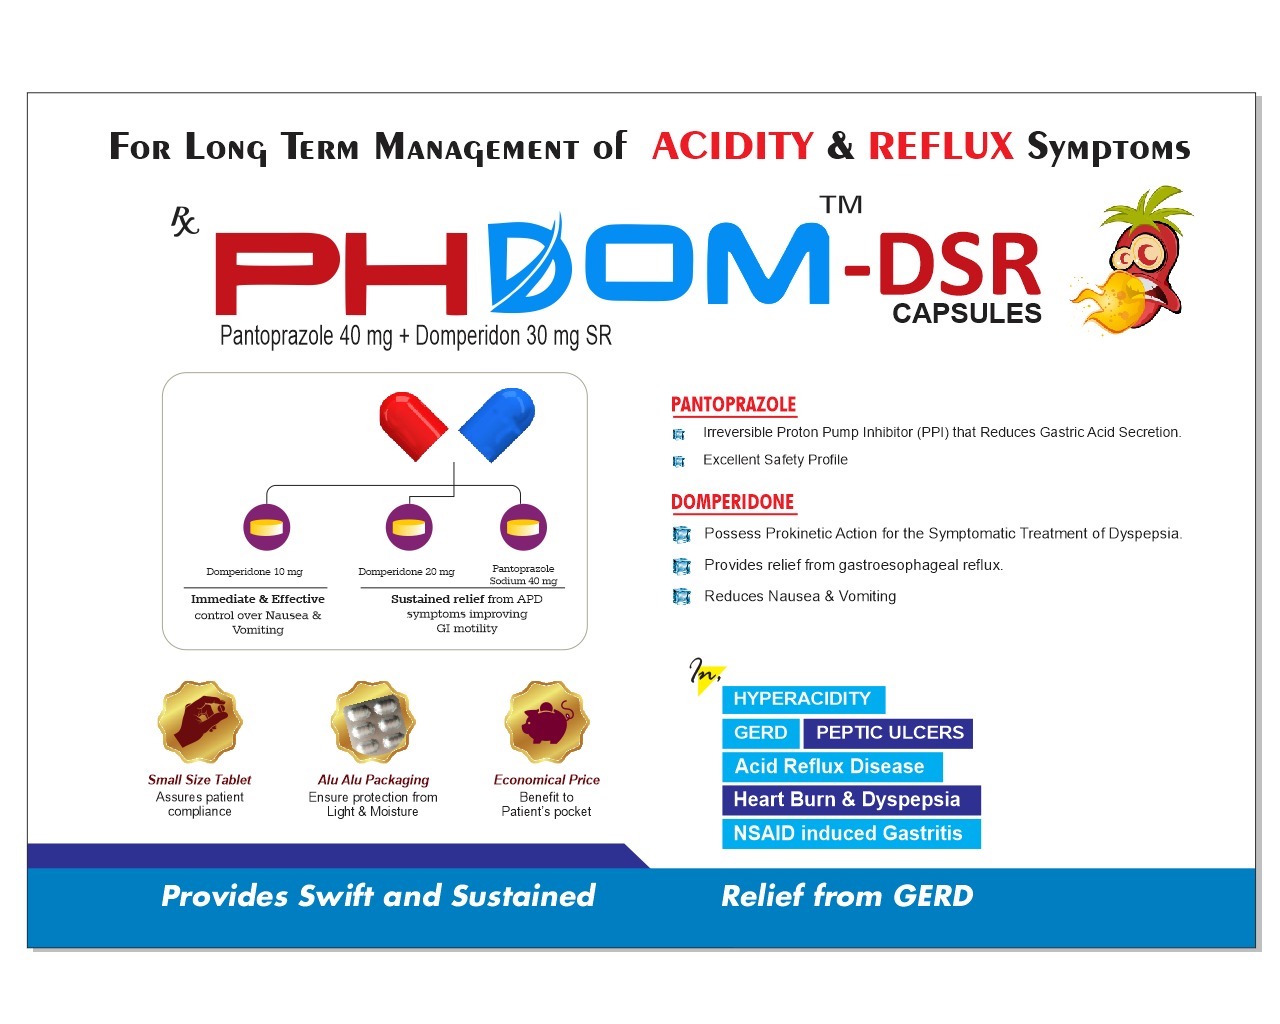 PHDOM-DSR